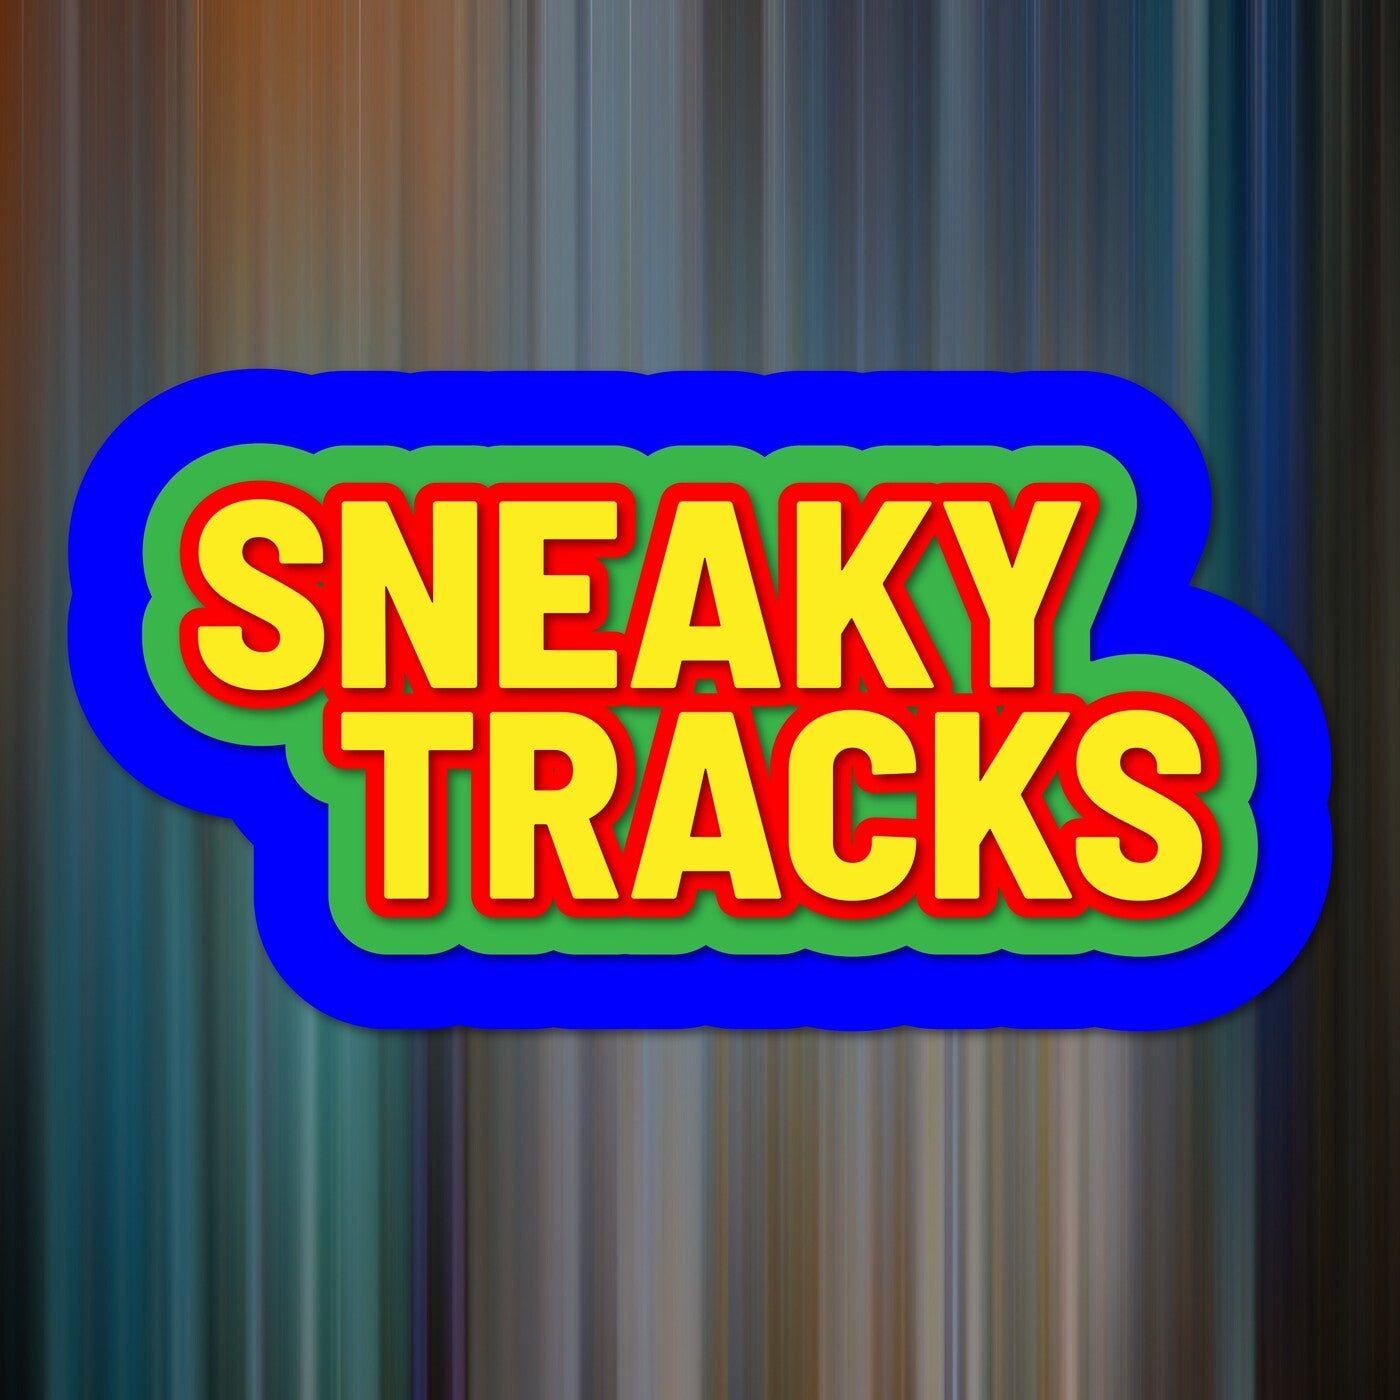 Sneaky Tracks